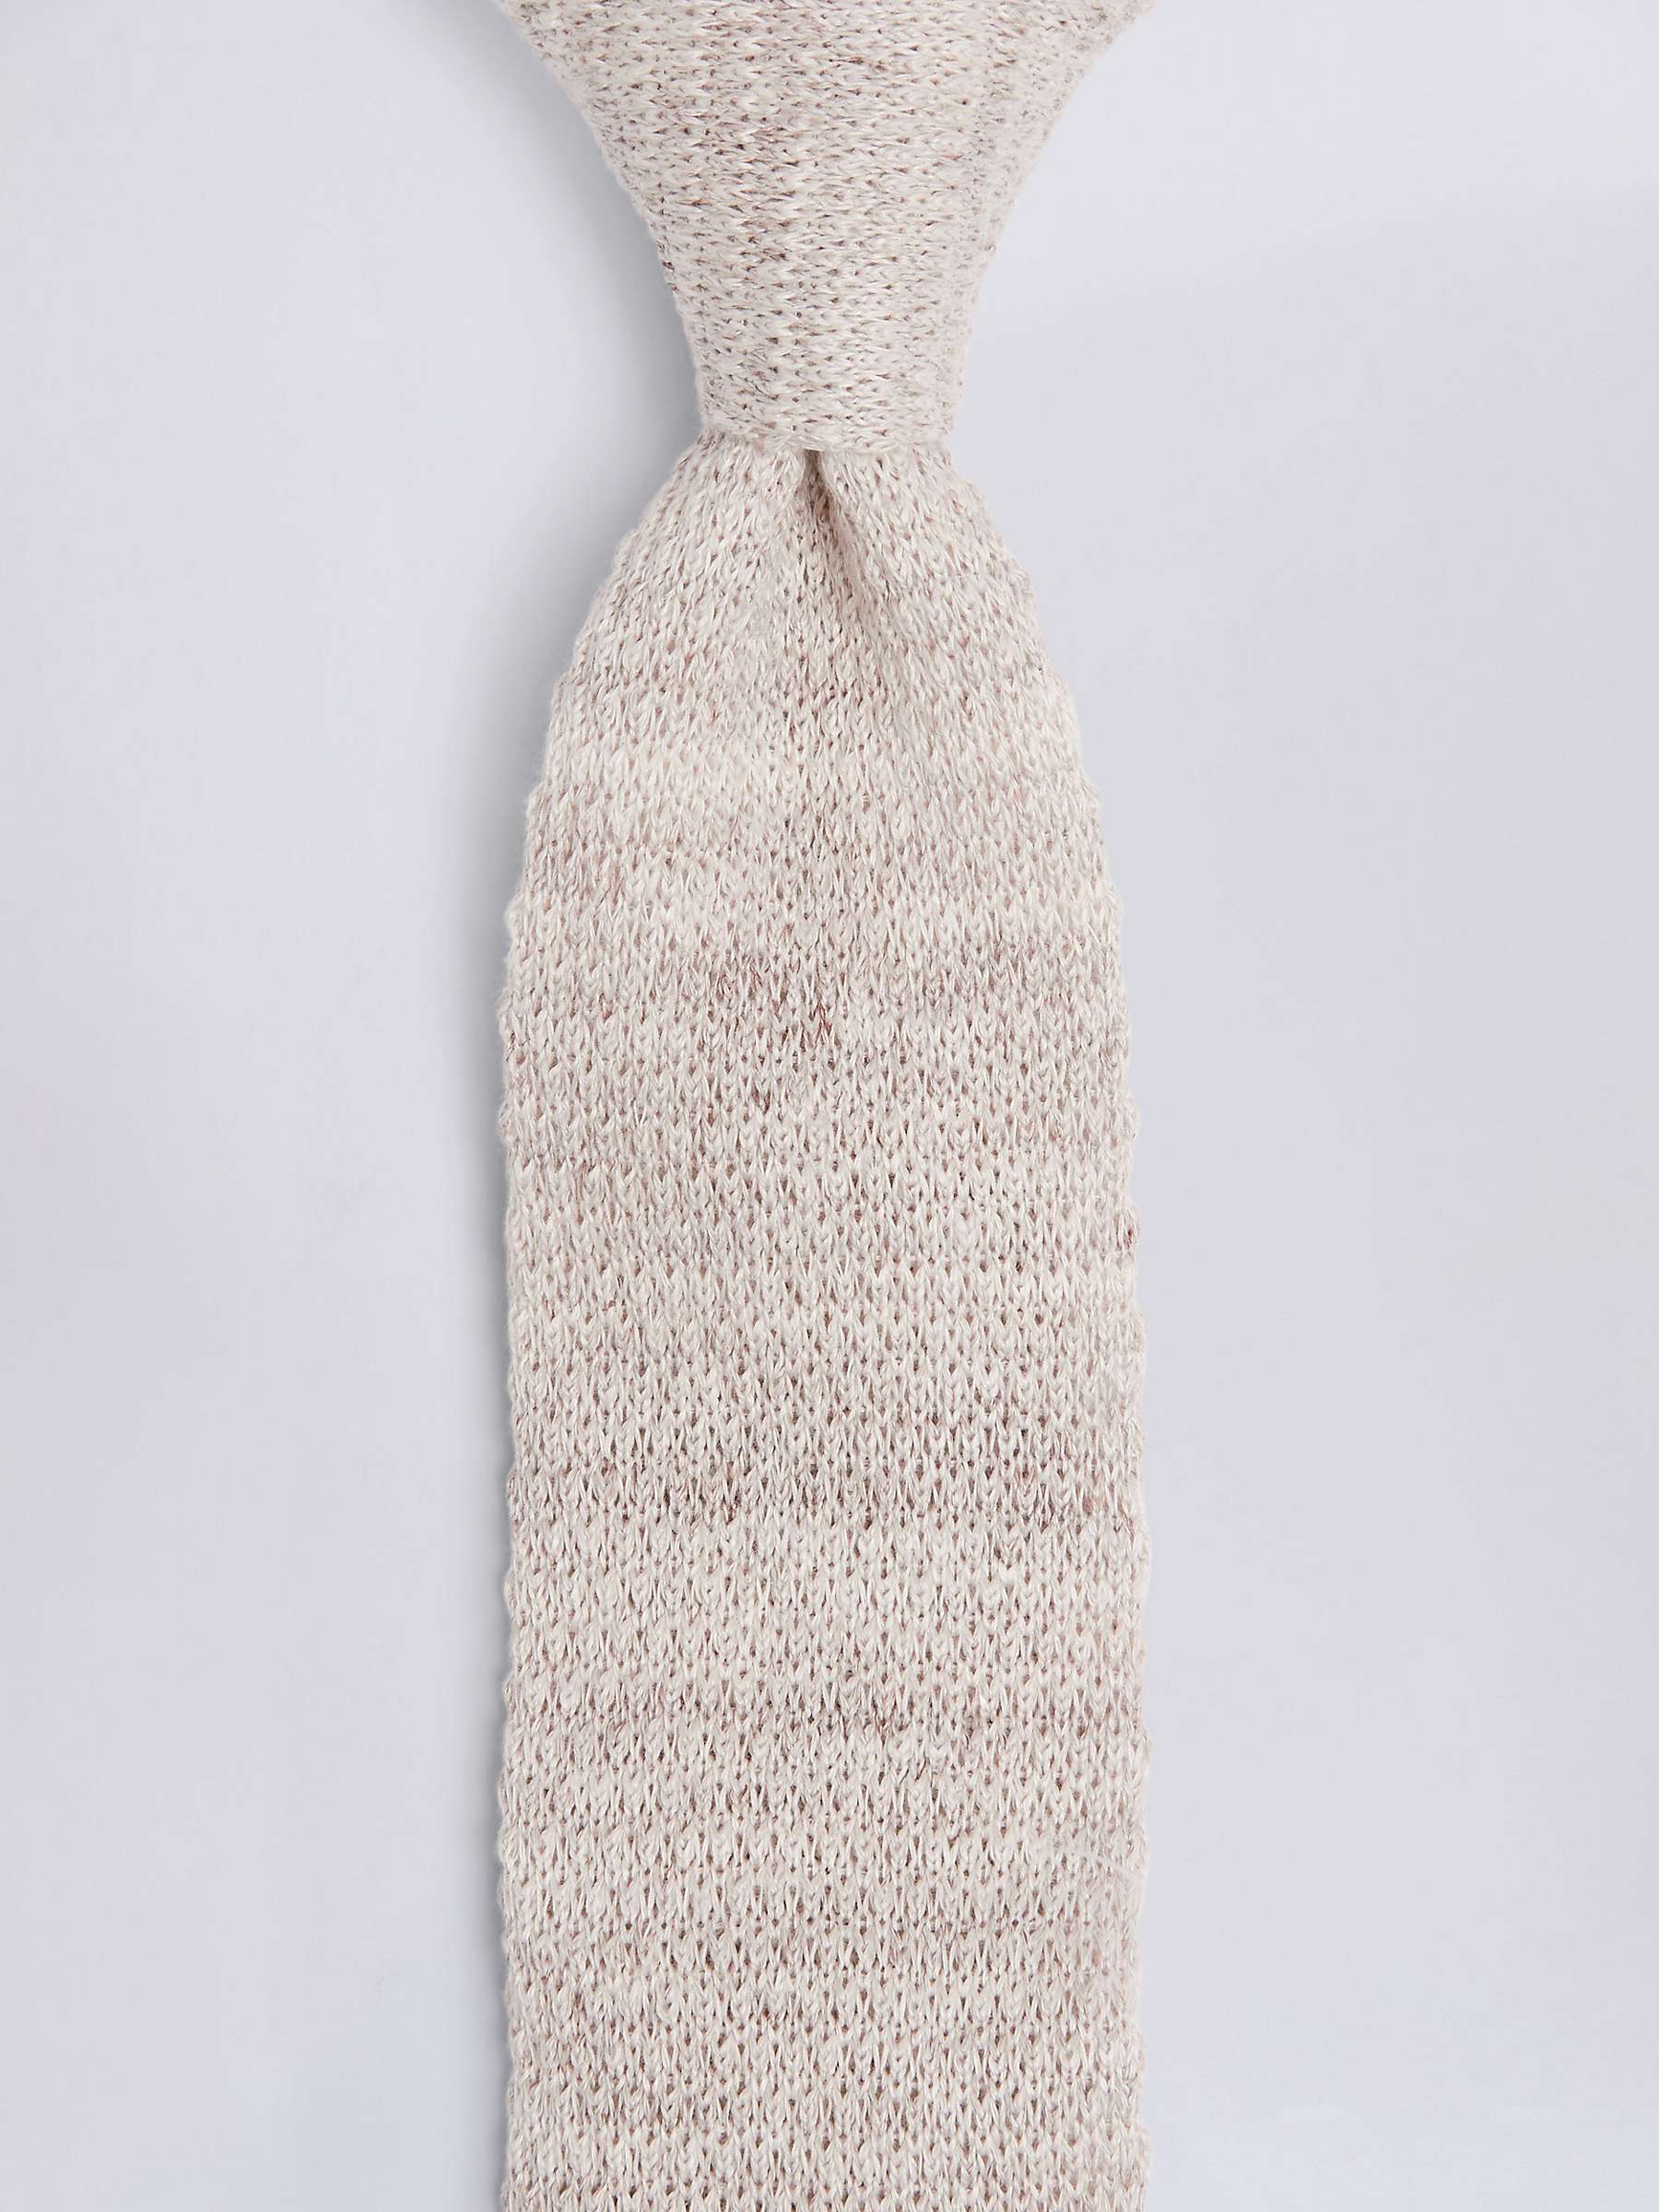 Buy Moss Melange Knitted Linen Tie Online at johnlewis.com